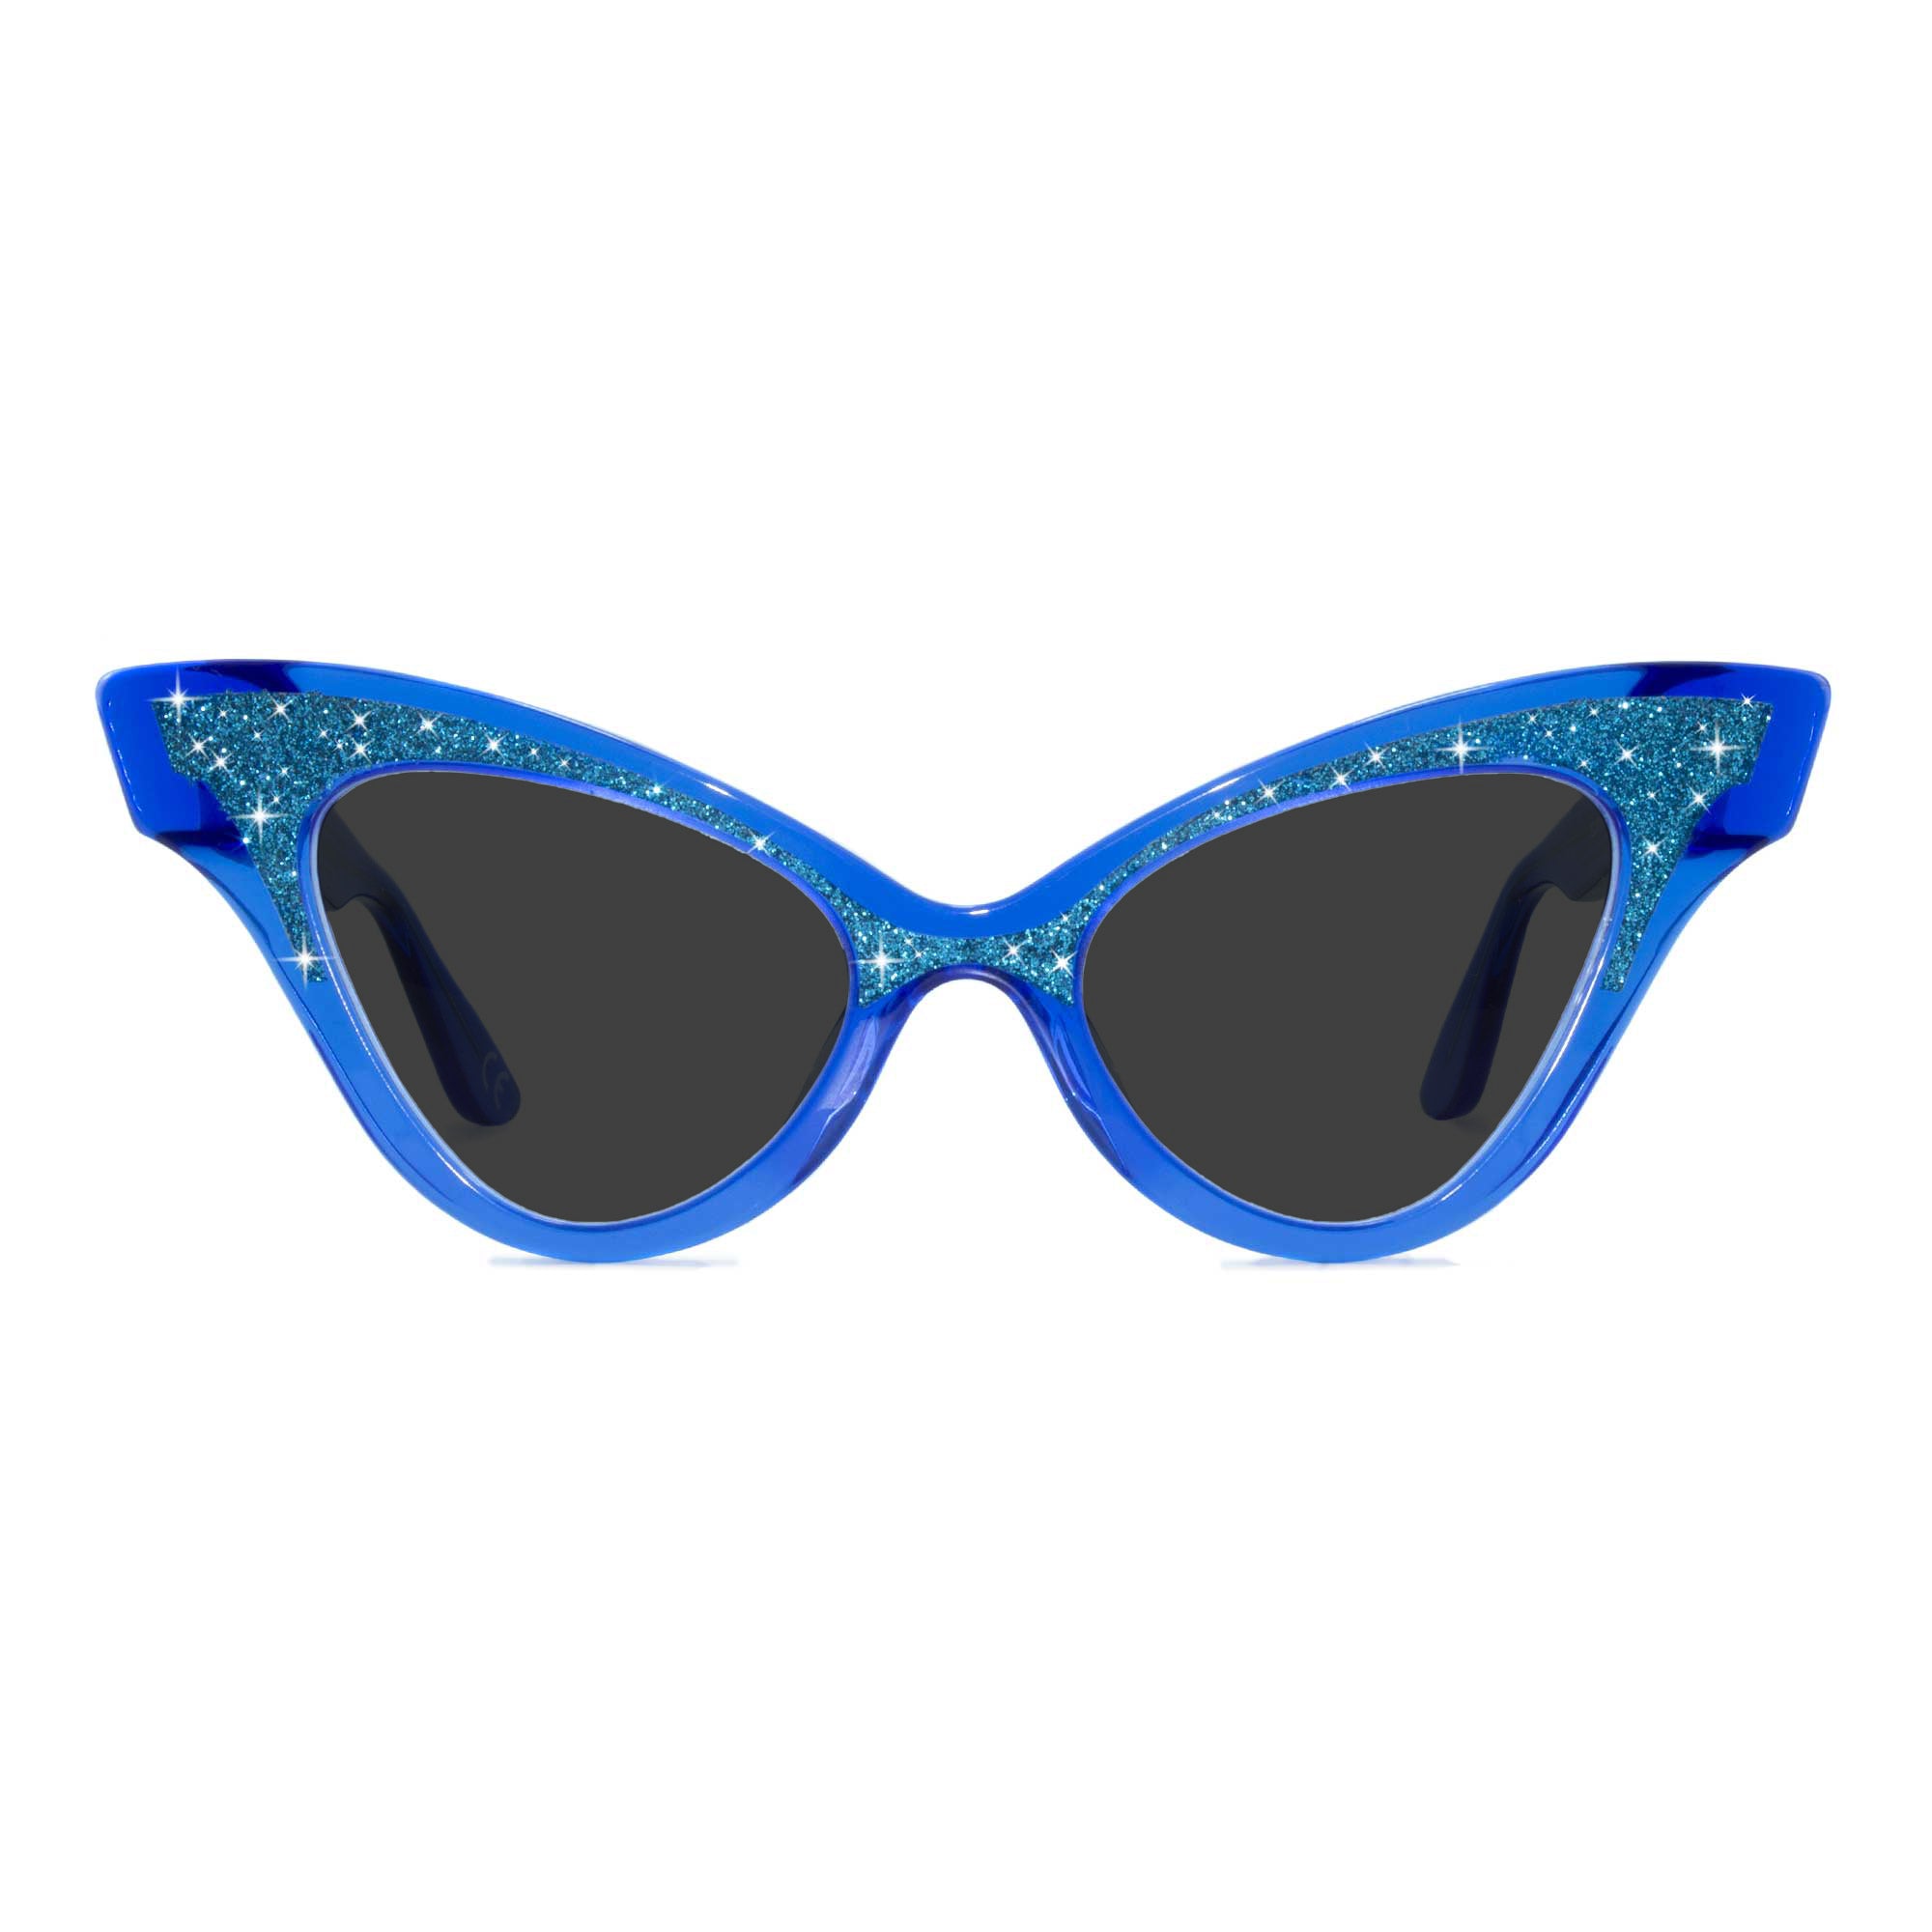 clear blue winged cat eye sunglasses